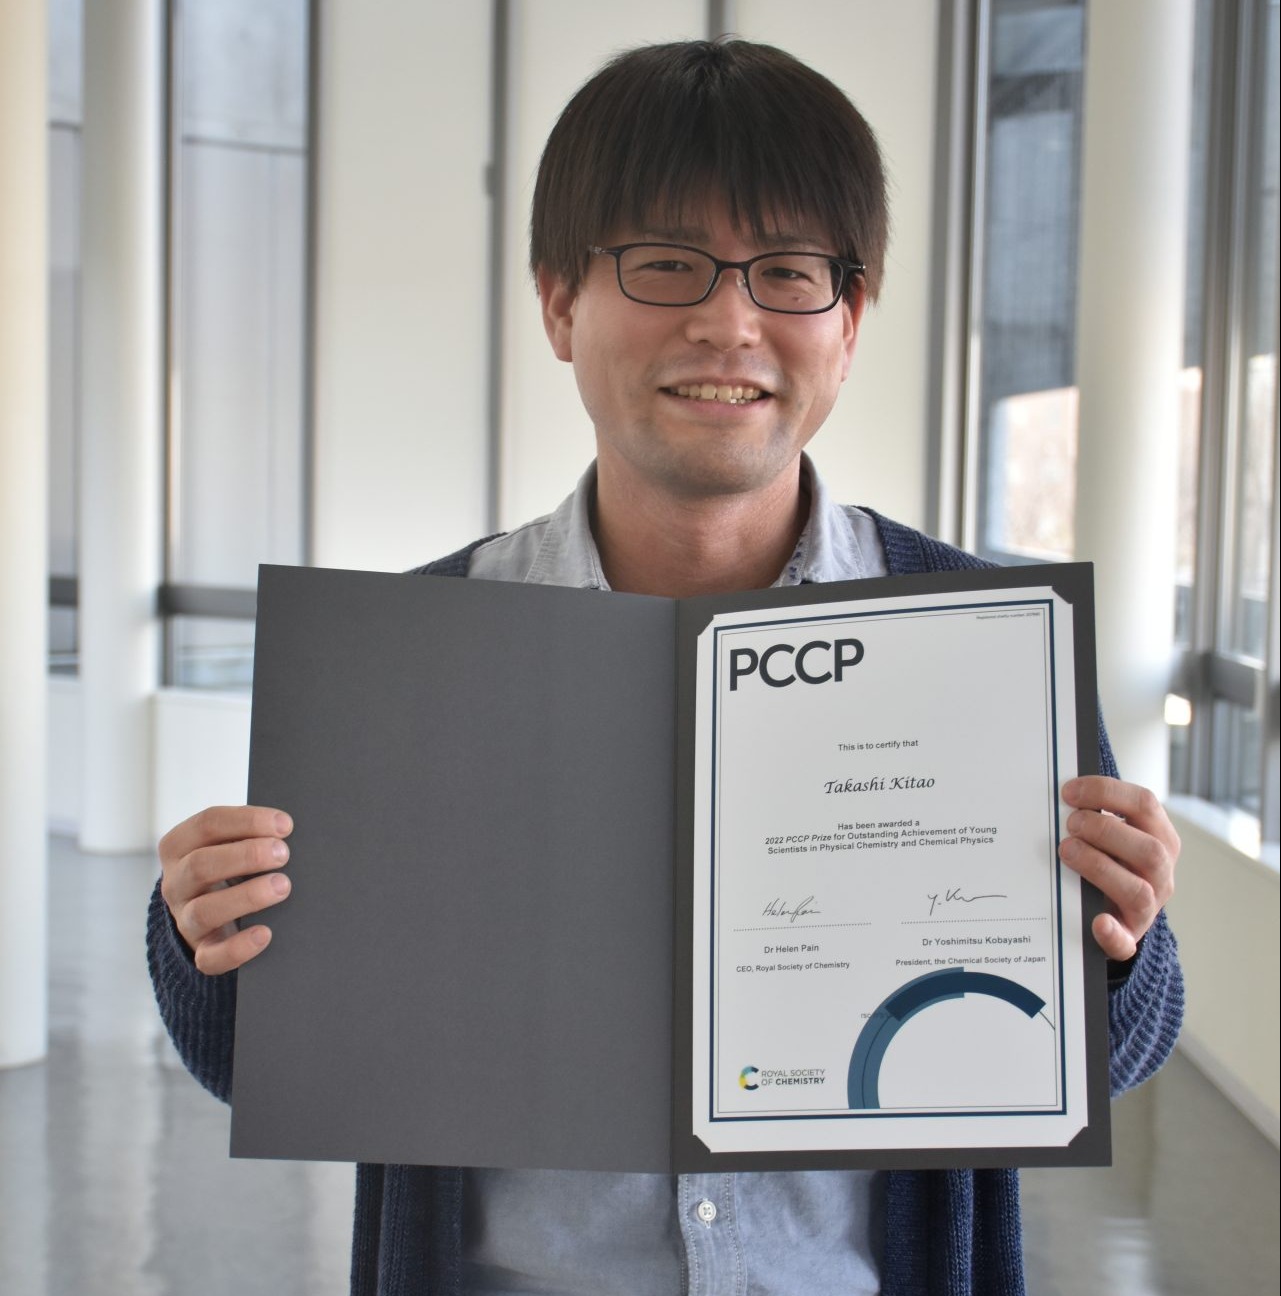 Takashi Kitao was awarded 16th PCCP Prize